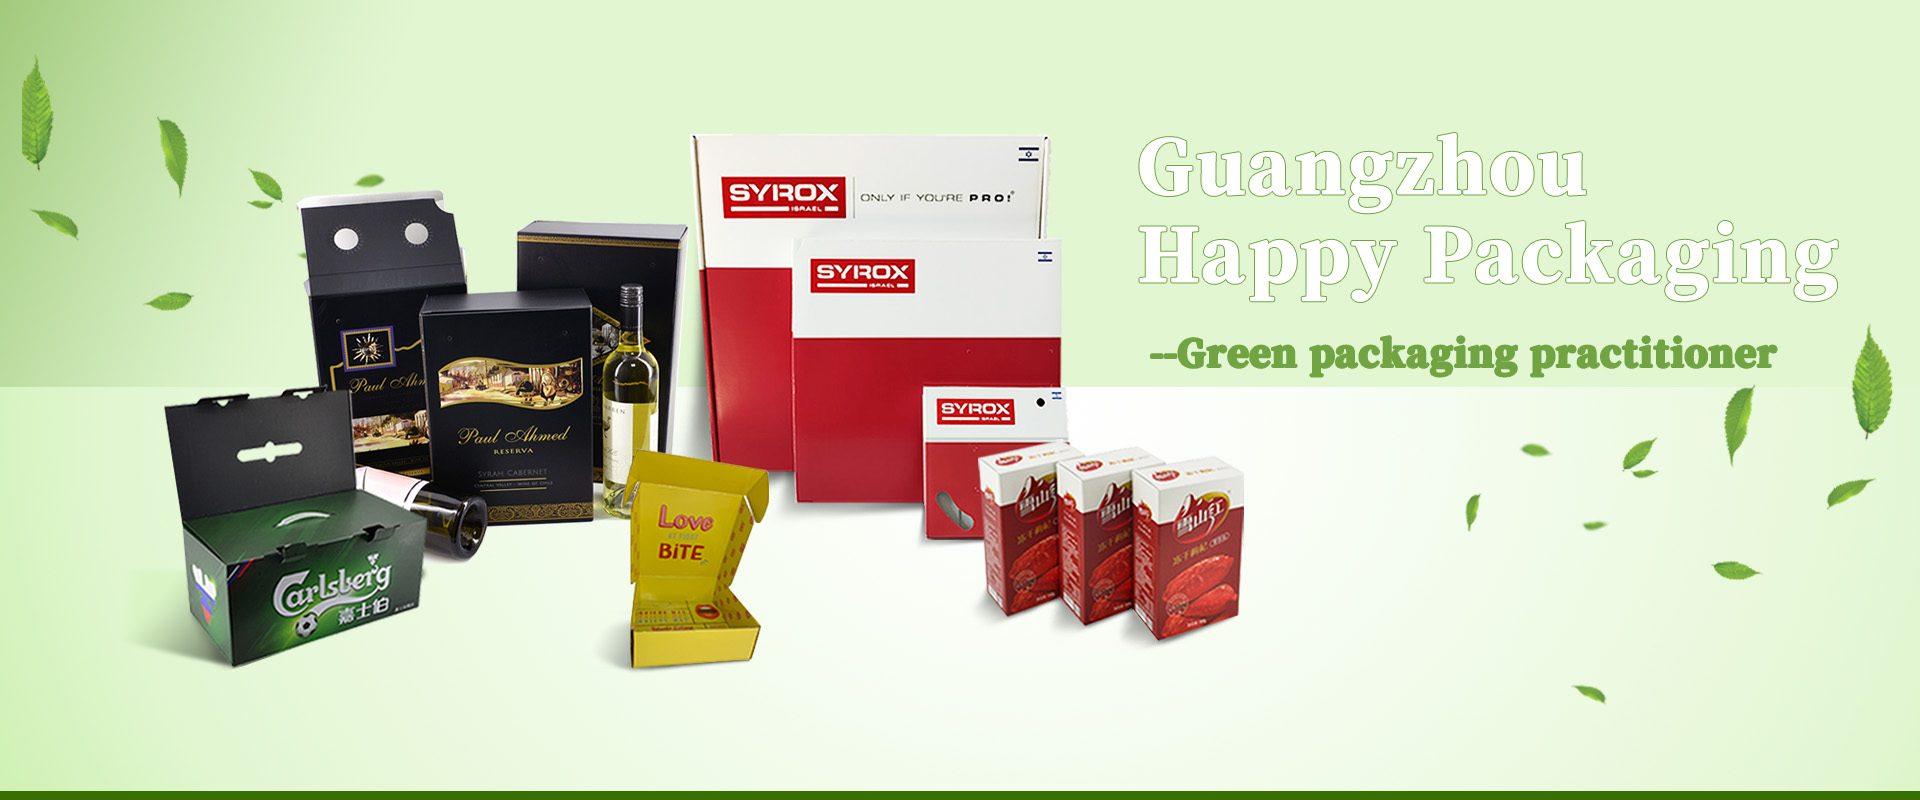 Guangzhou Happy Packaging --עוסק באריזה ירוקה